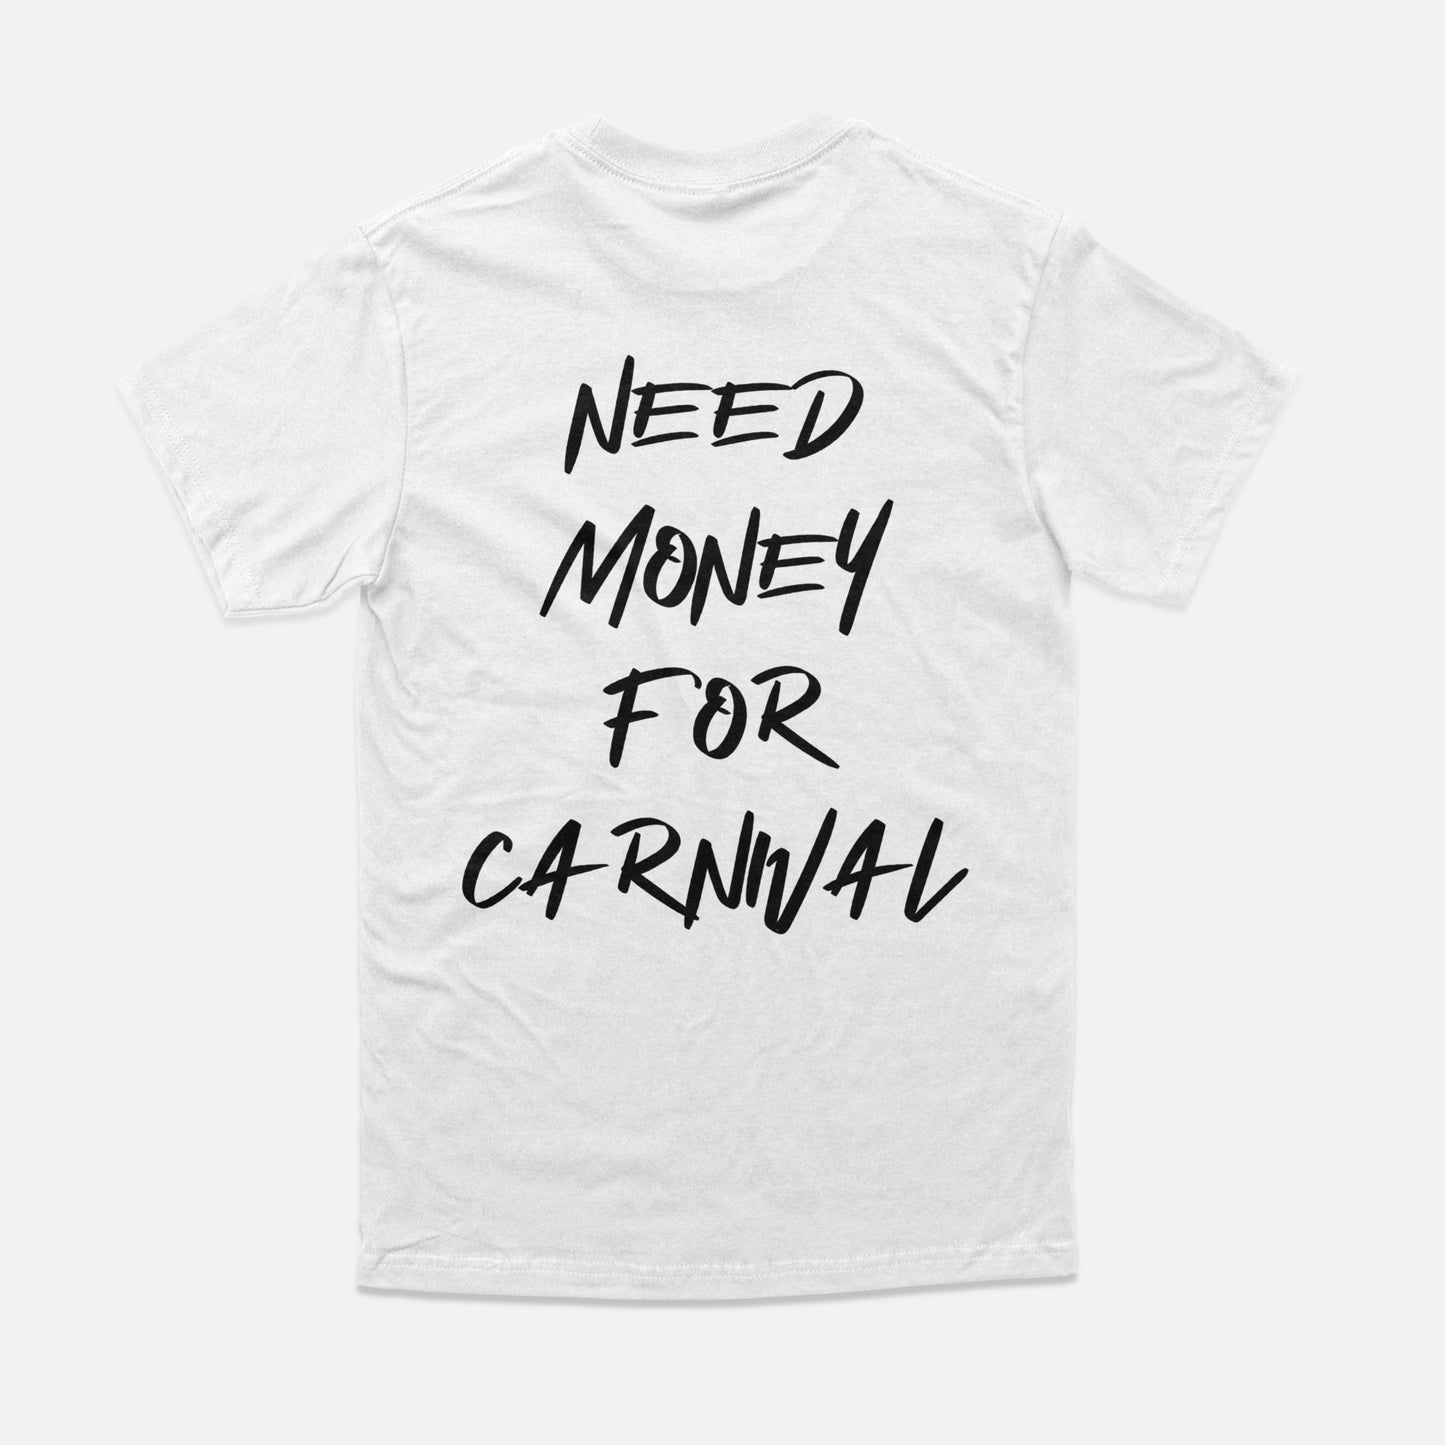 One Caribbean "Need Money For Carnival" Tee (White/ Black)